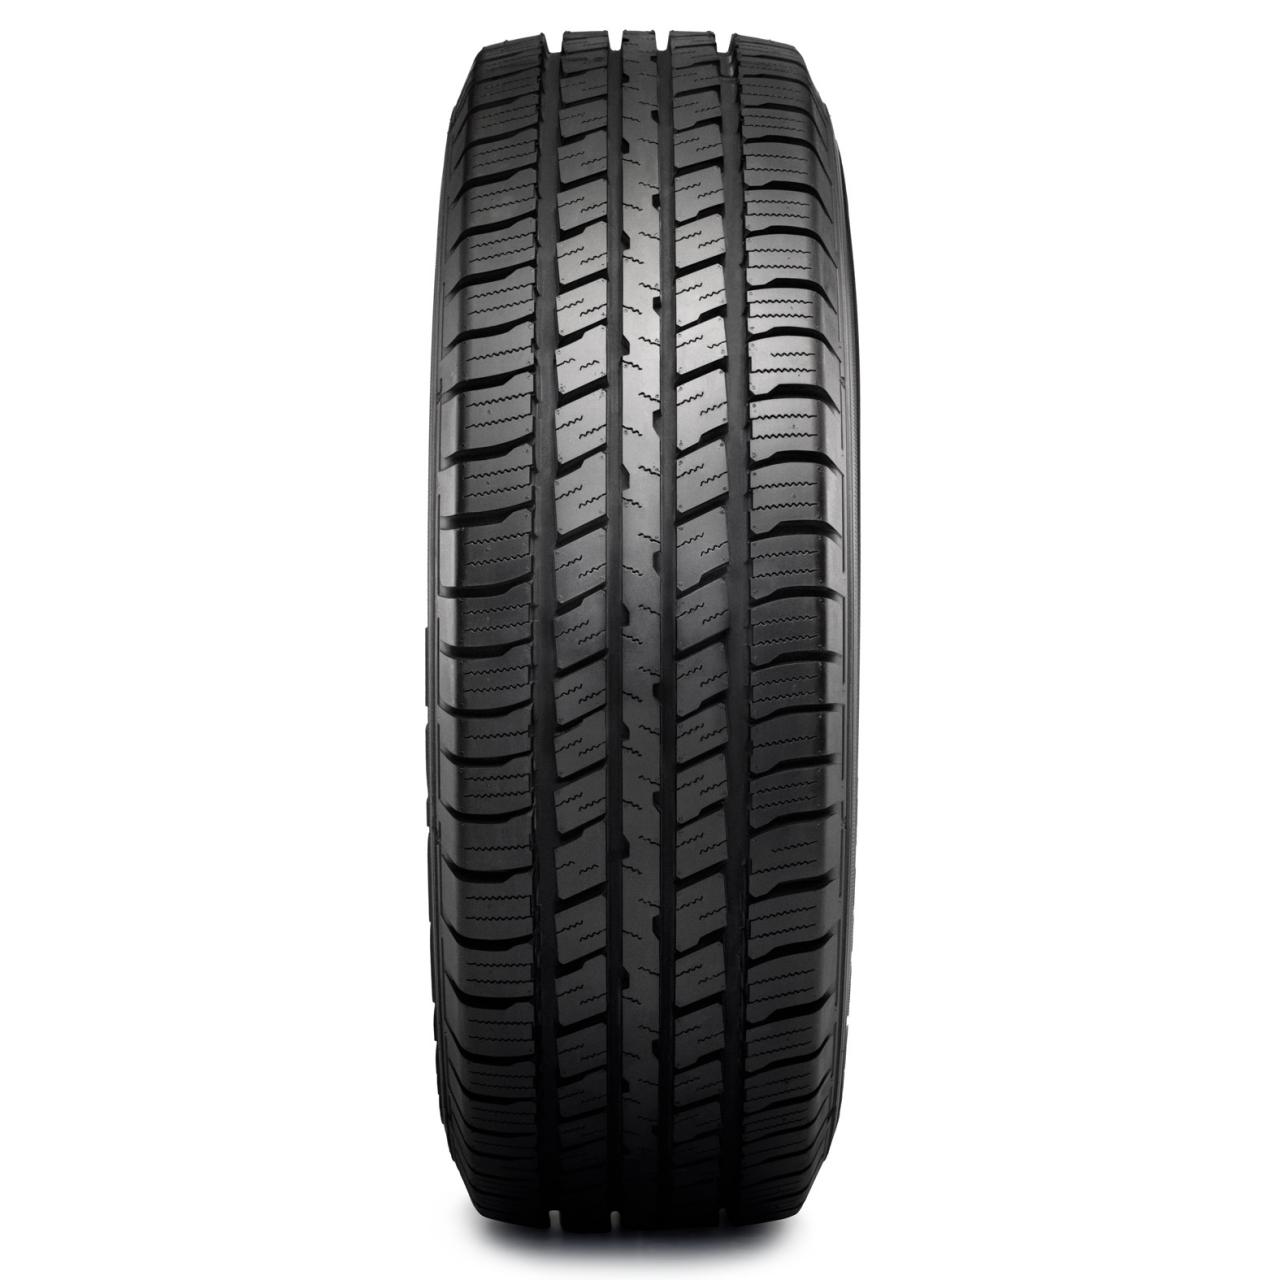 Sumitomo Tire Encounter HT All Season Radial Tire-265/75R16 116T